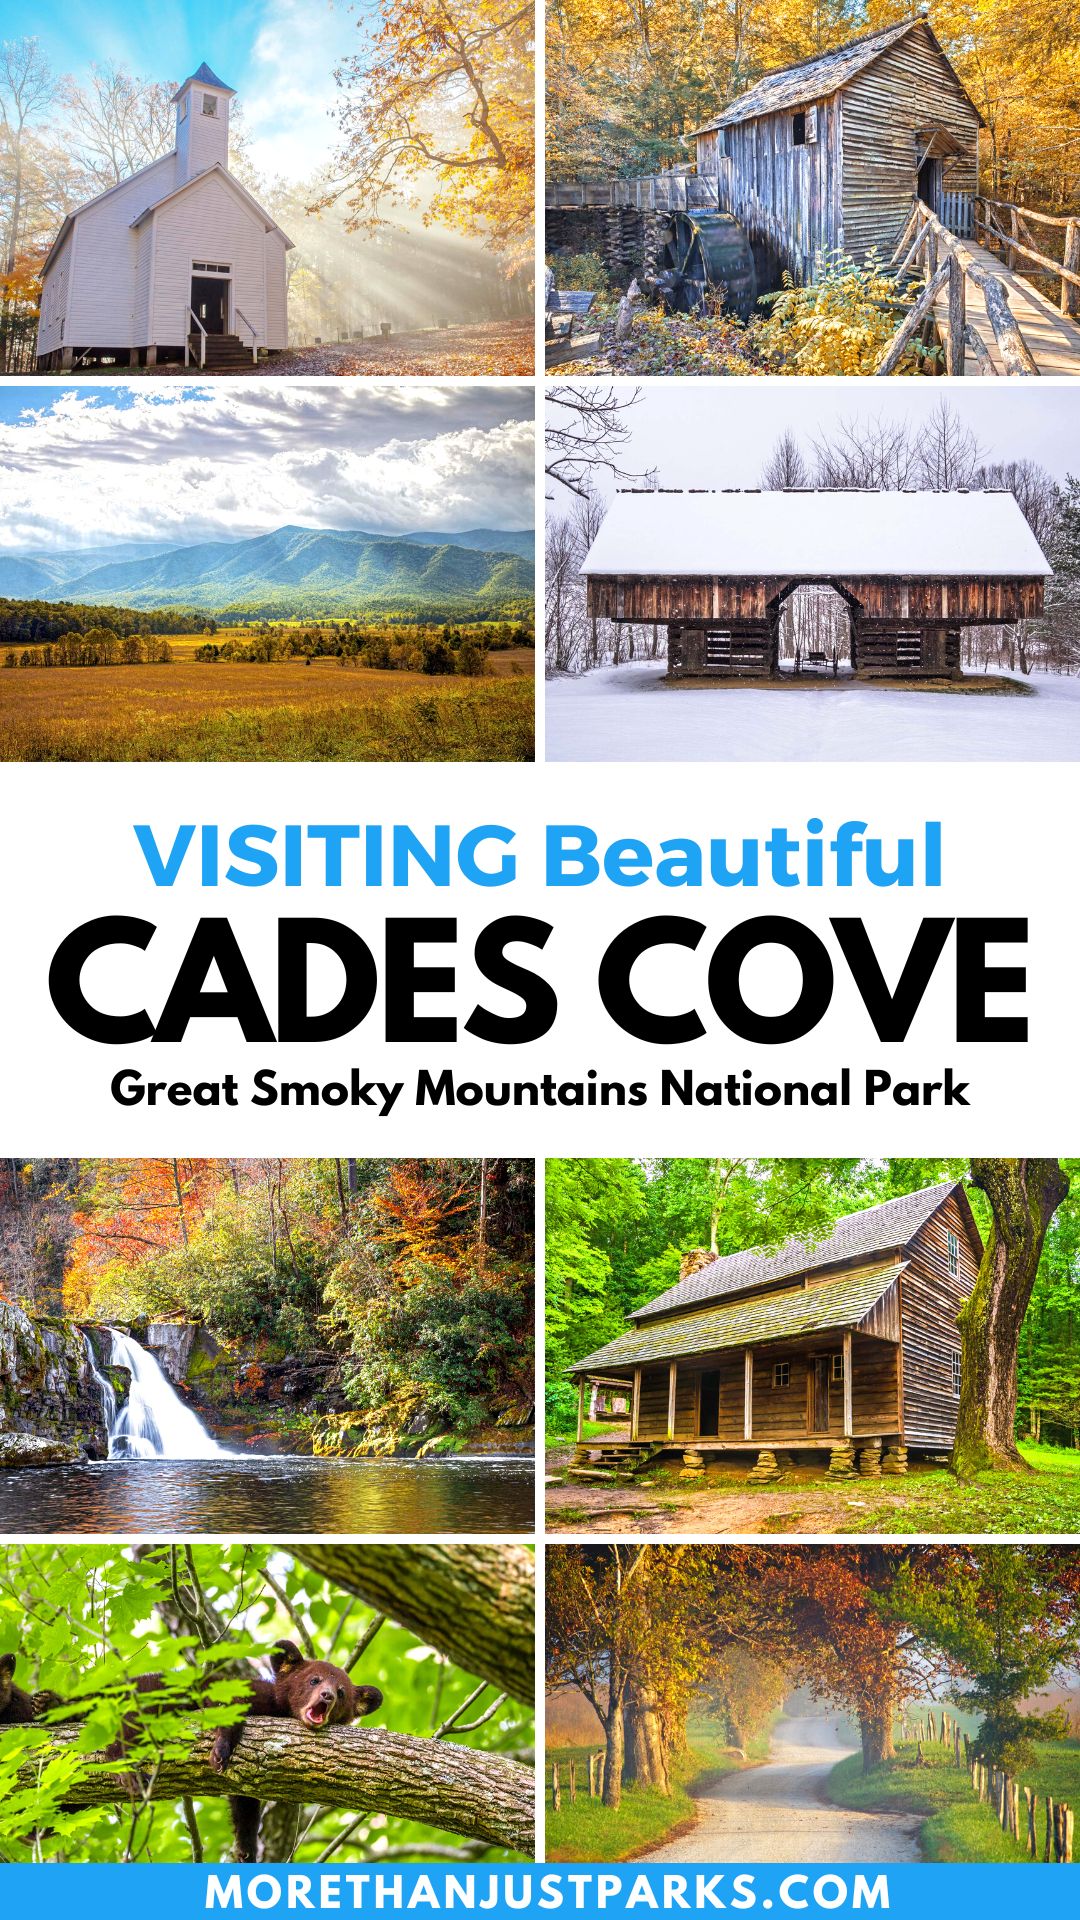 cades cove, great smoky mountains national park, visiting cades cove, thigns to do cades cove